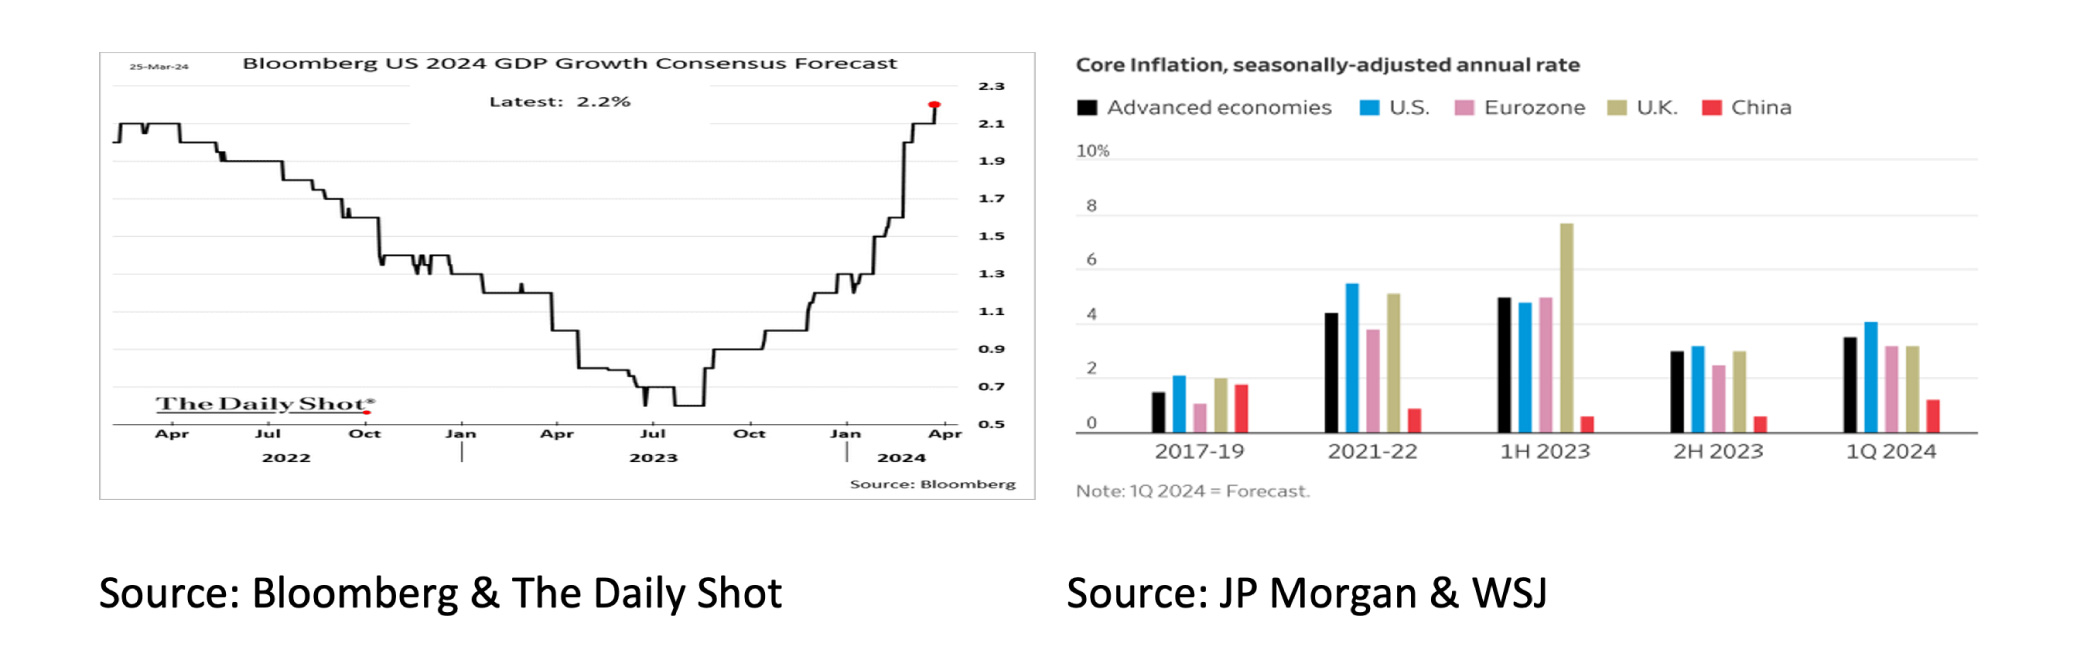 Bloomerg Us 2004 GDP Growth Consensus Forecast